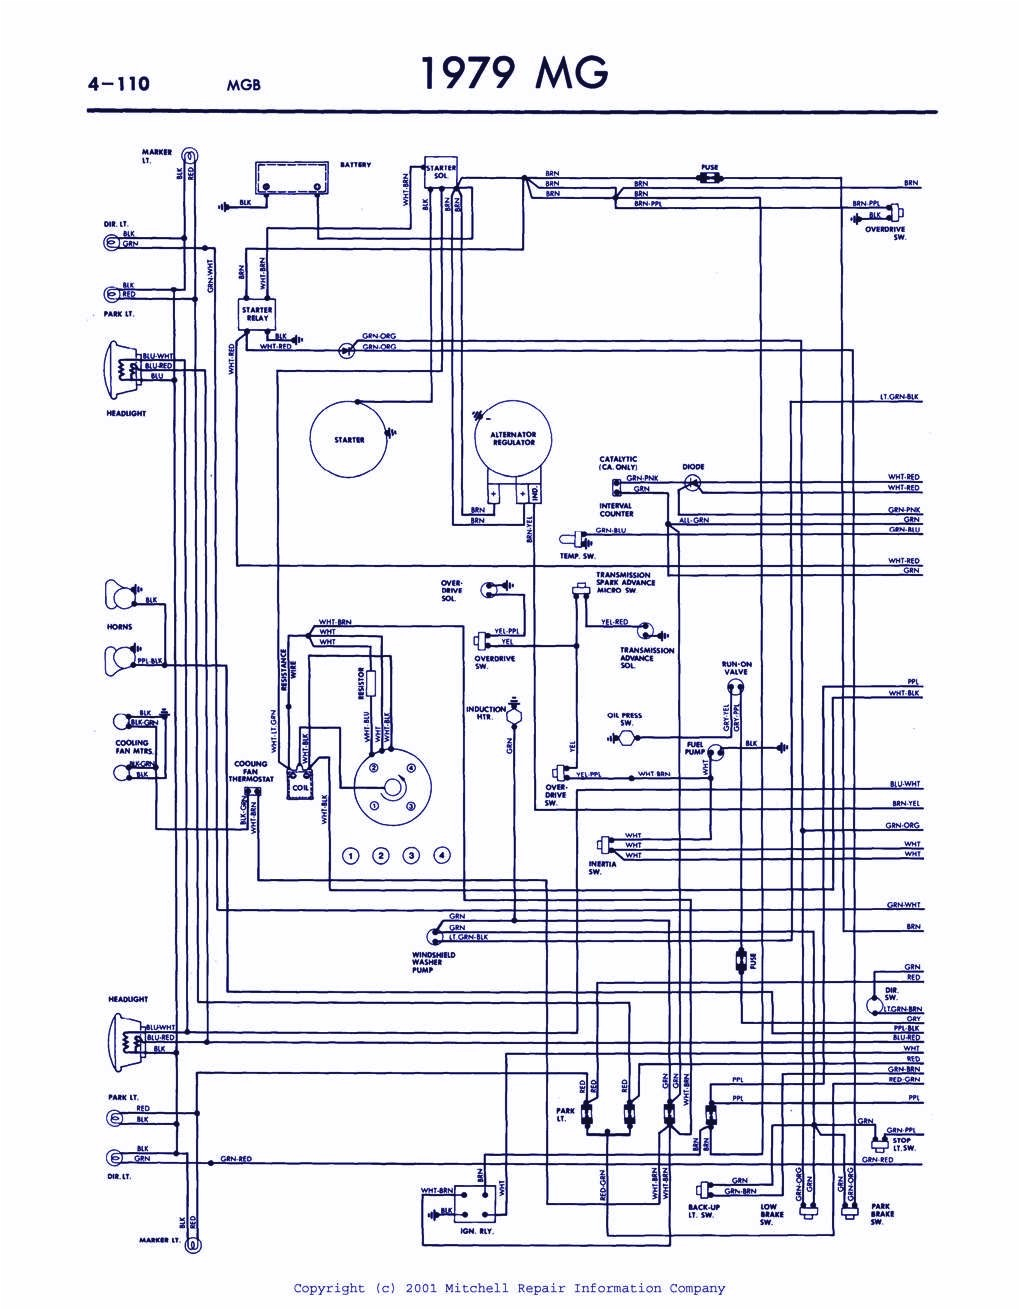 mg wiring diagram elegant 1976 mgb wiring diagram od wire center e280a2 of mg wiring diagram jpg